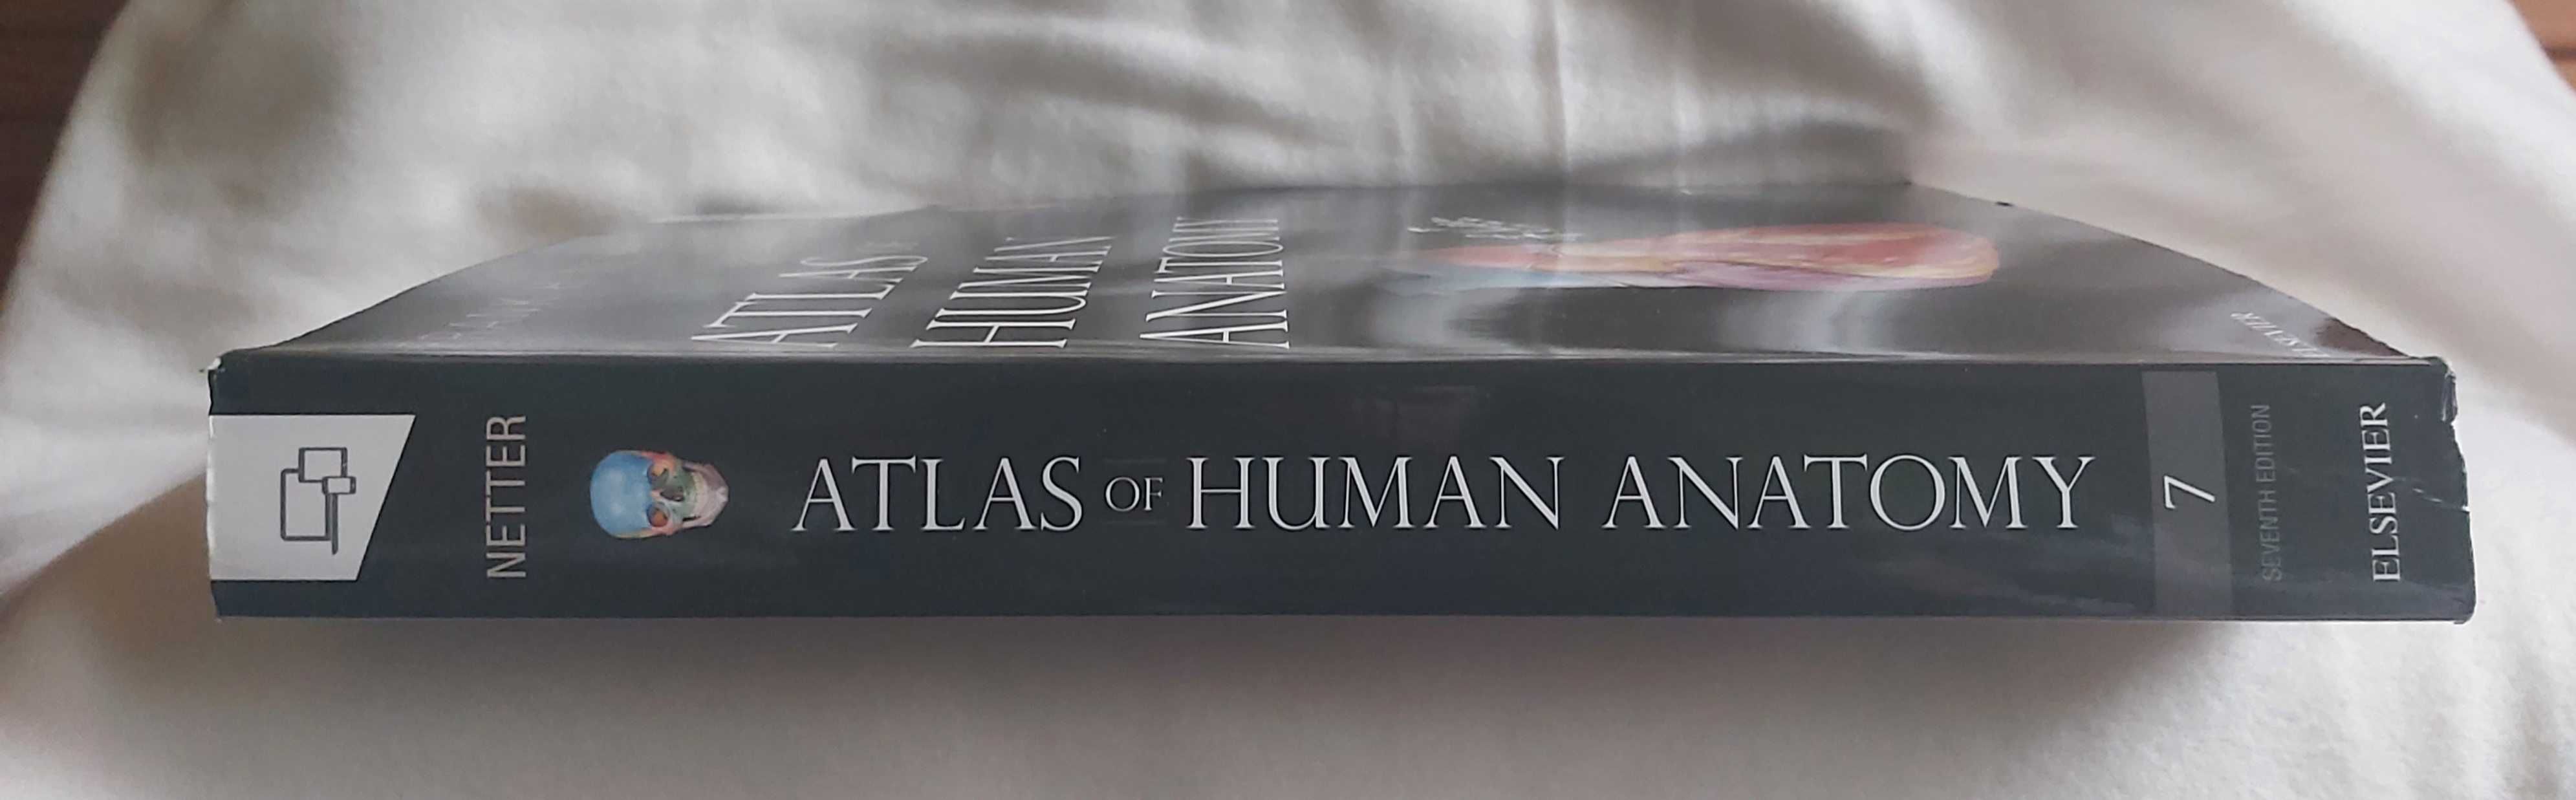 Frank Netter - „Atlas of human anatomy”